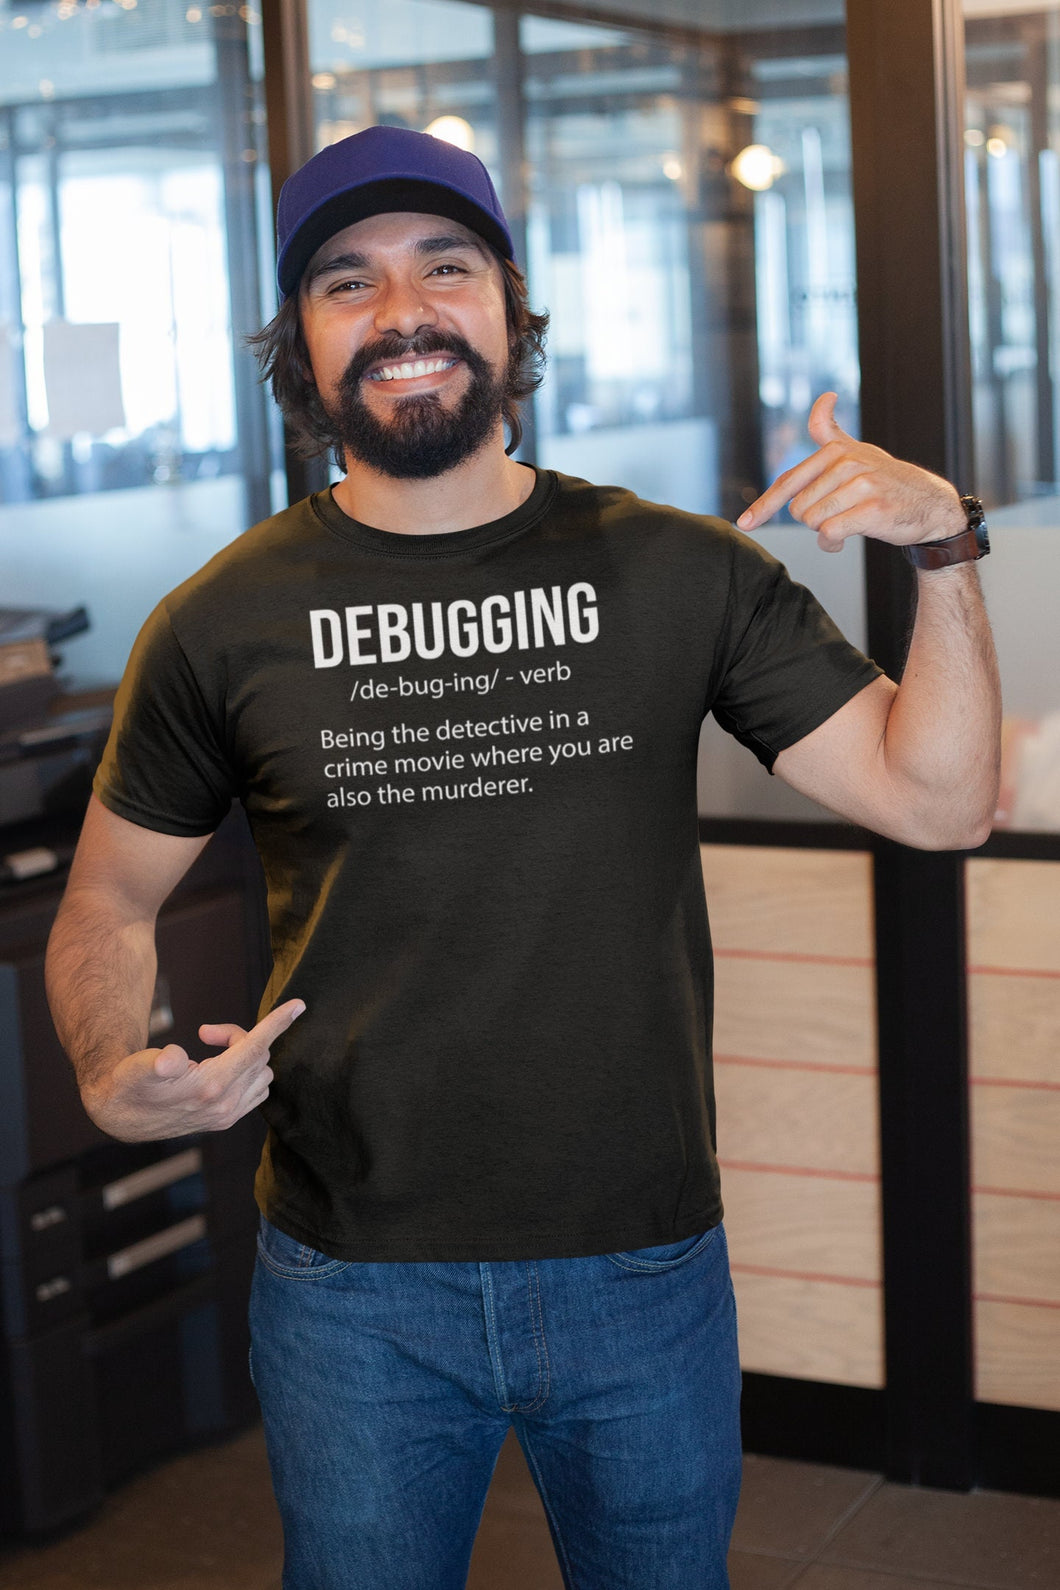 Debugging Definition Shirt, Bug Coding Shirt, Computer Programmer Shirt, Computer Geek Tee